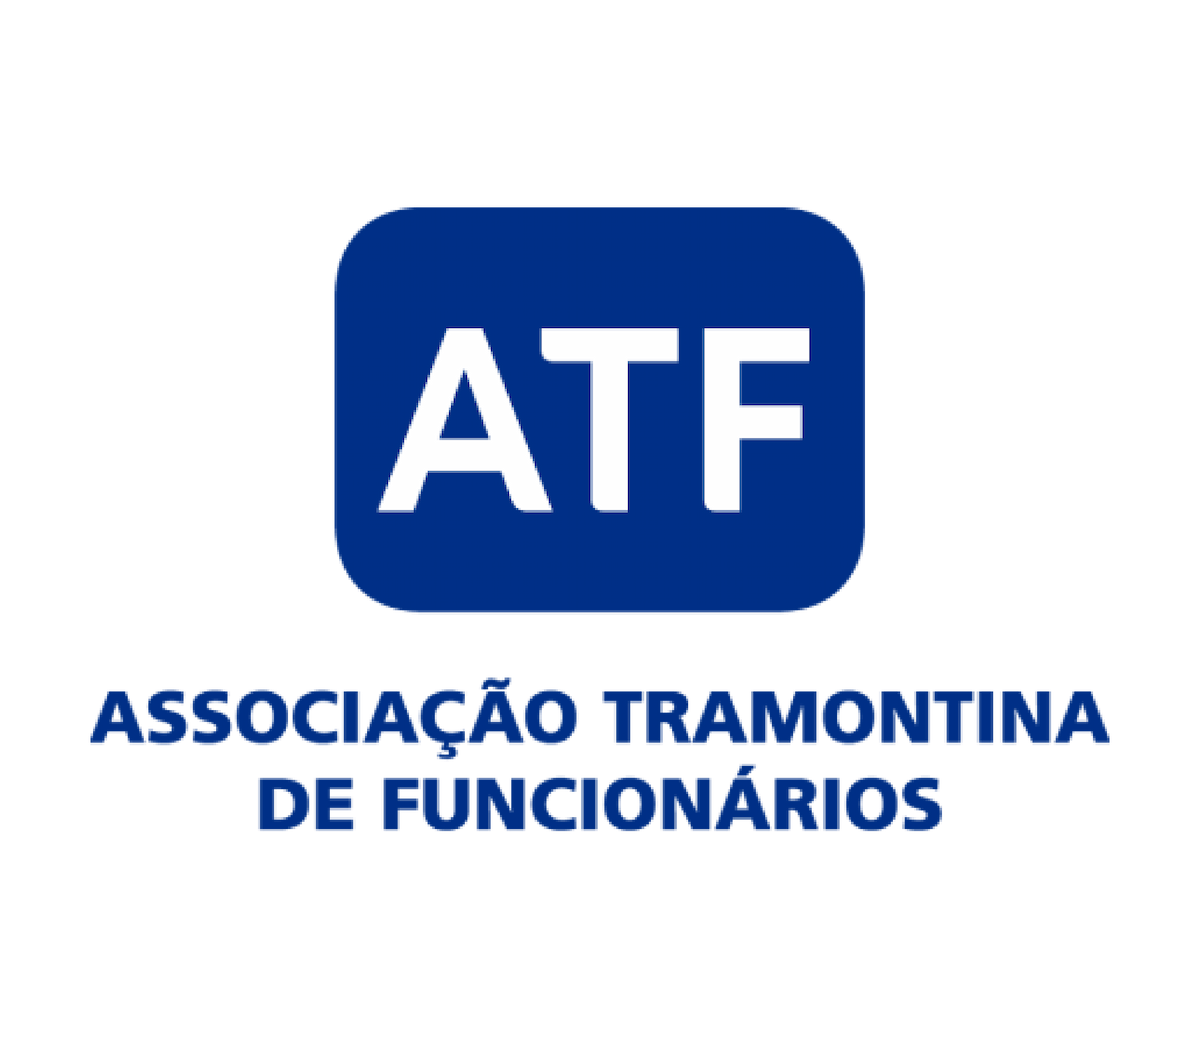 ATF logotype: Tramontina Employees Association.